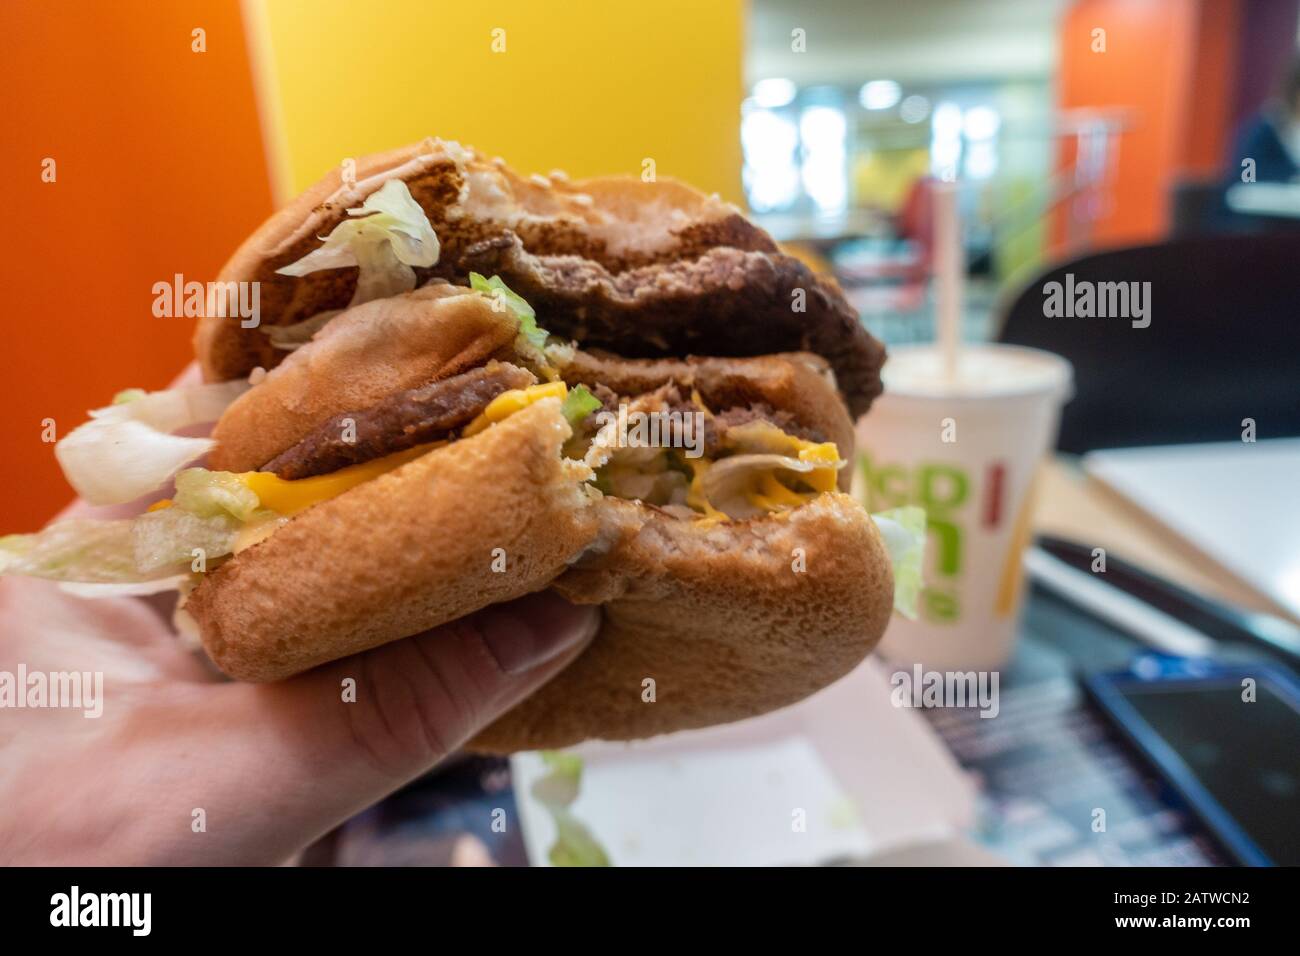 A person eating a Big Mac hamburger in a McDonalds fast food restaurant. Stock Photo